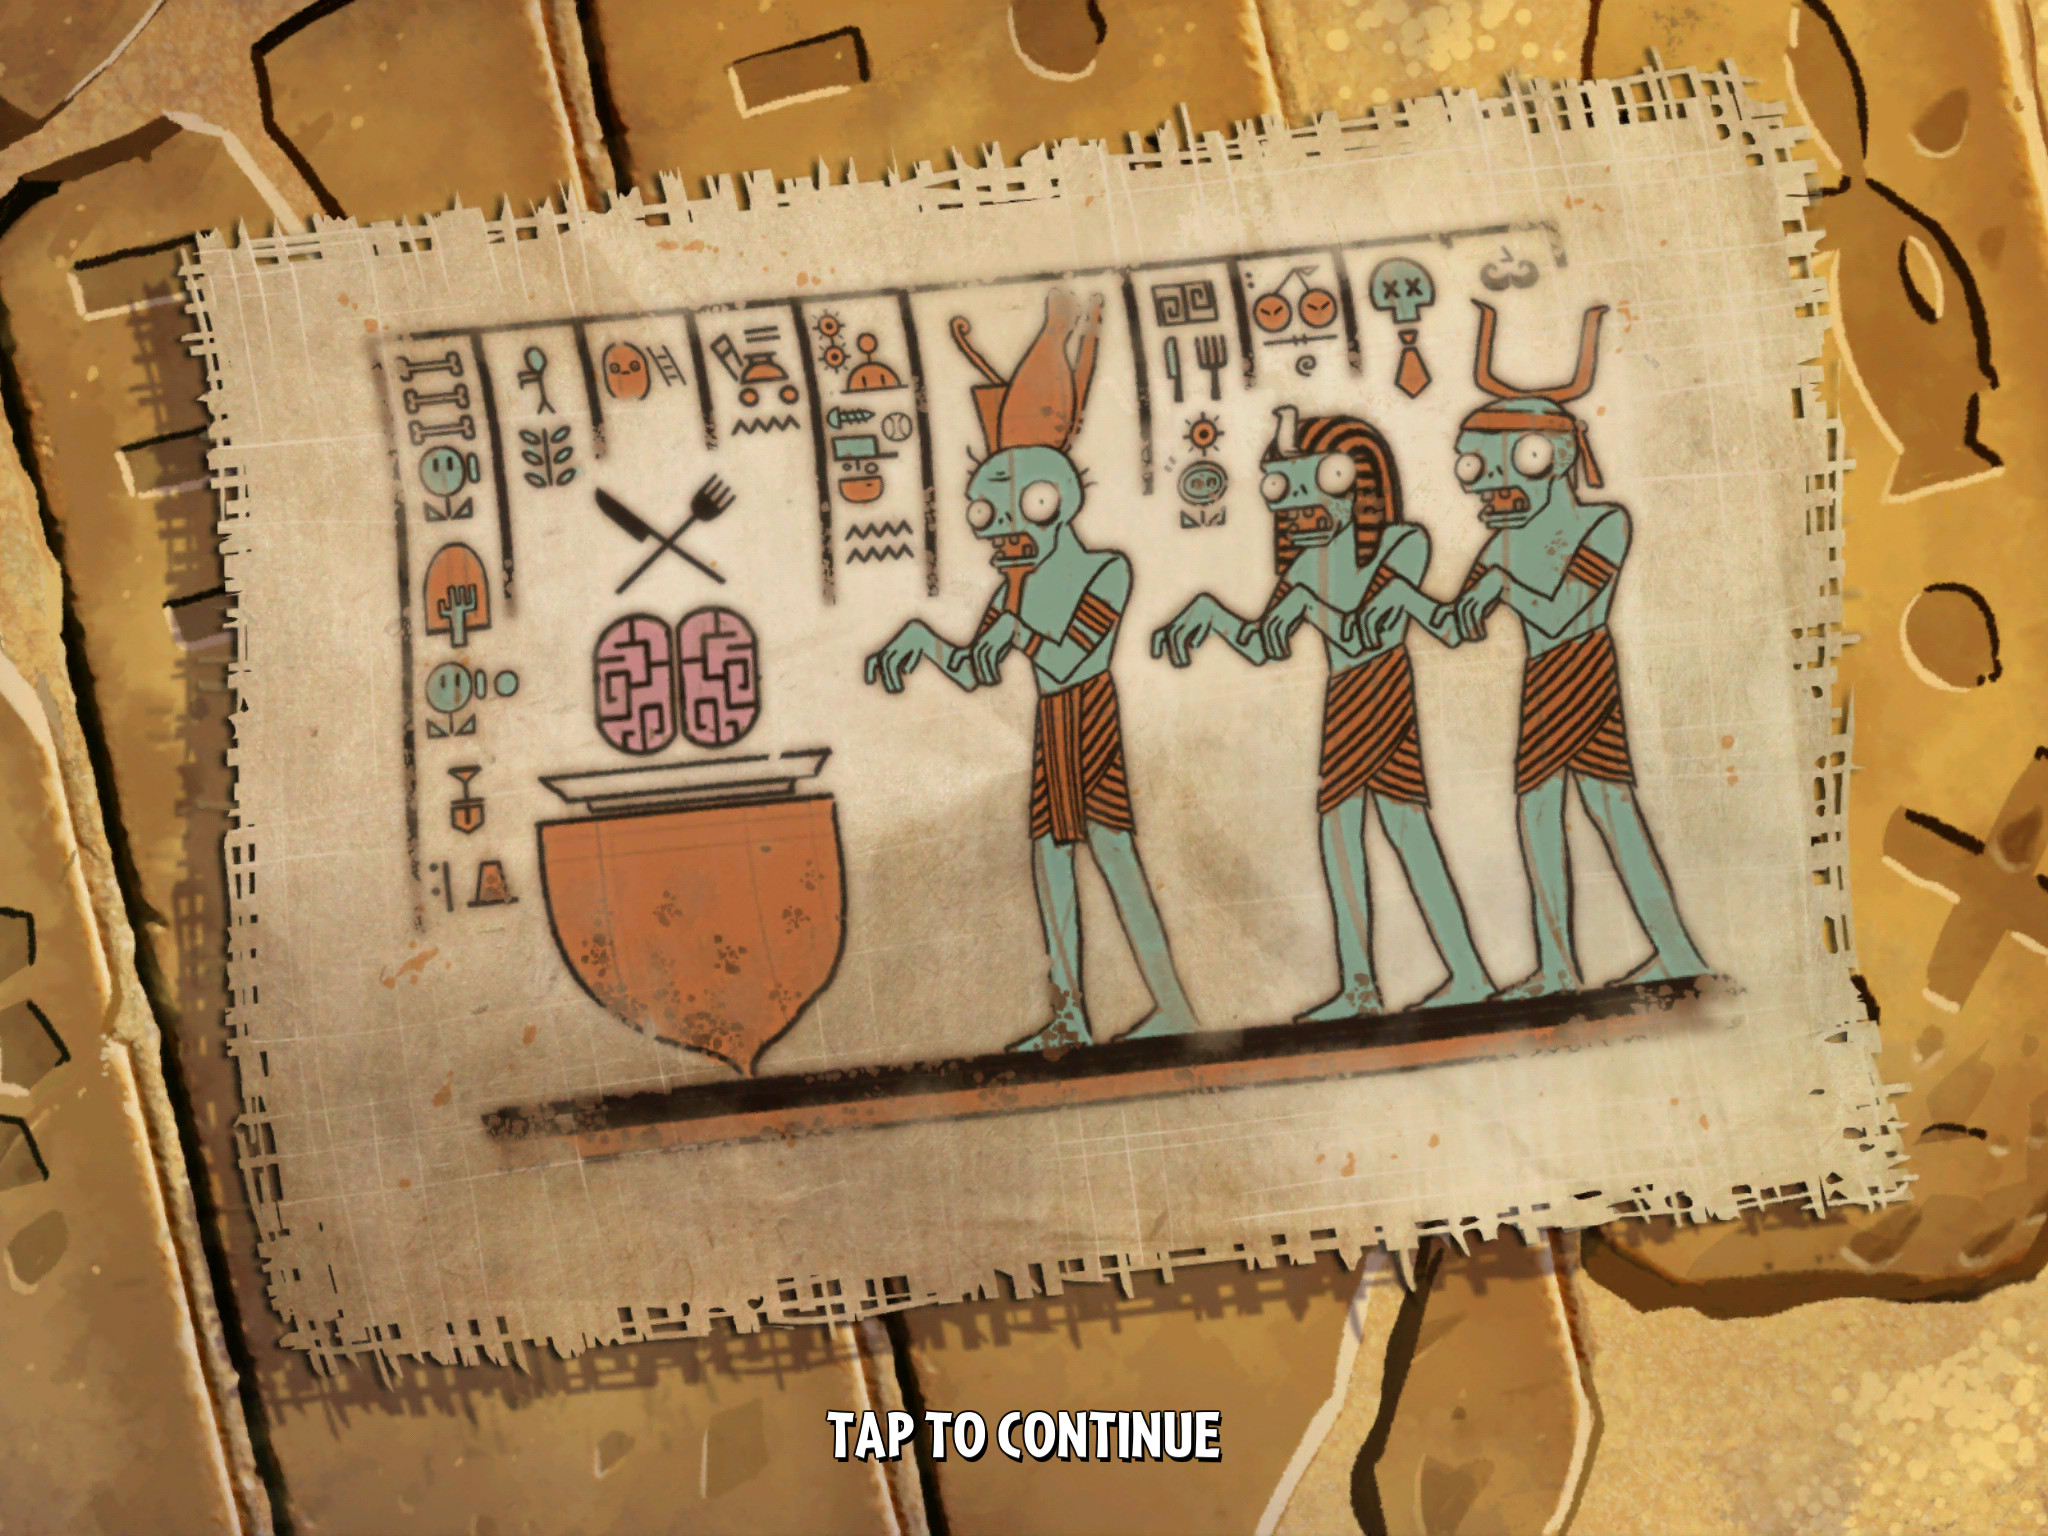 2048x1536 Ancient Egyptian Hieroglyphics | Image - Ancient Egypt Hieroglyphs.PNG -  Plants vs. Zombies